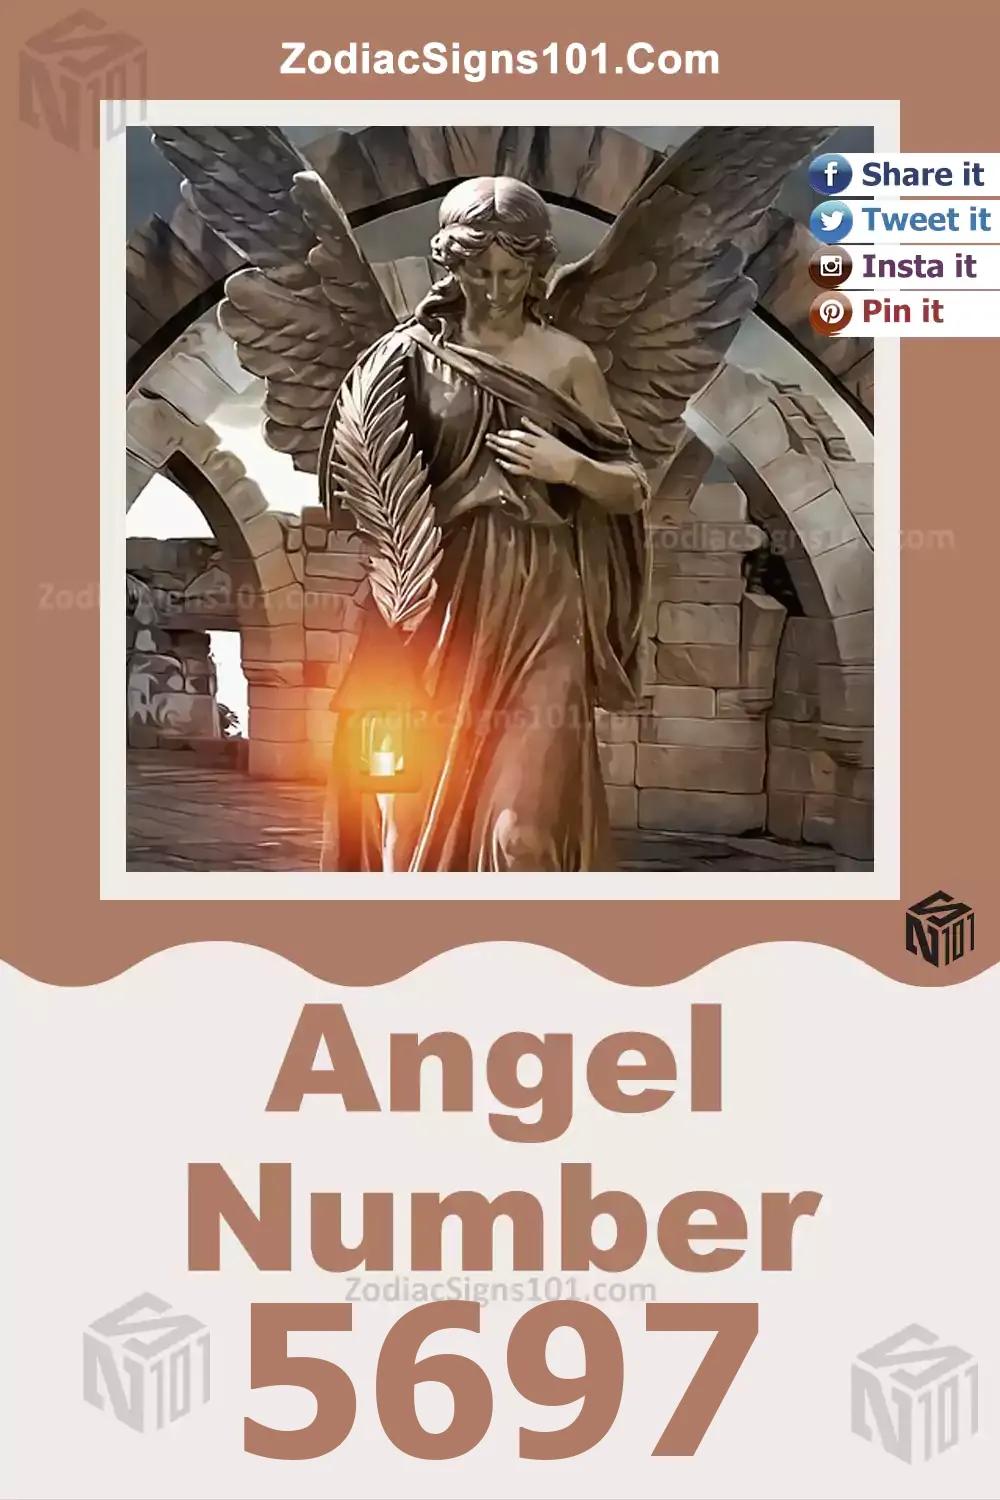 5697-Angel-Number-Meaning.jpg